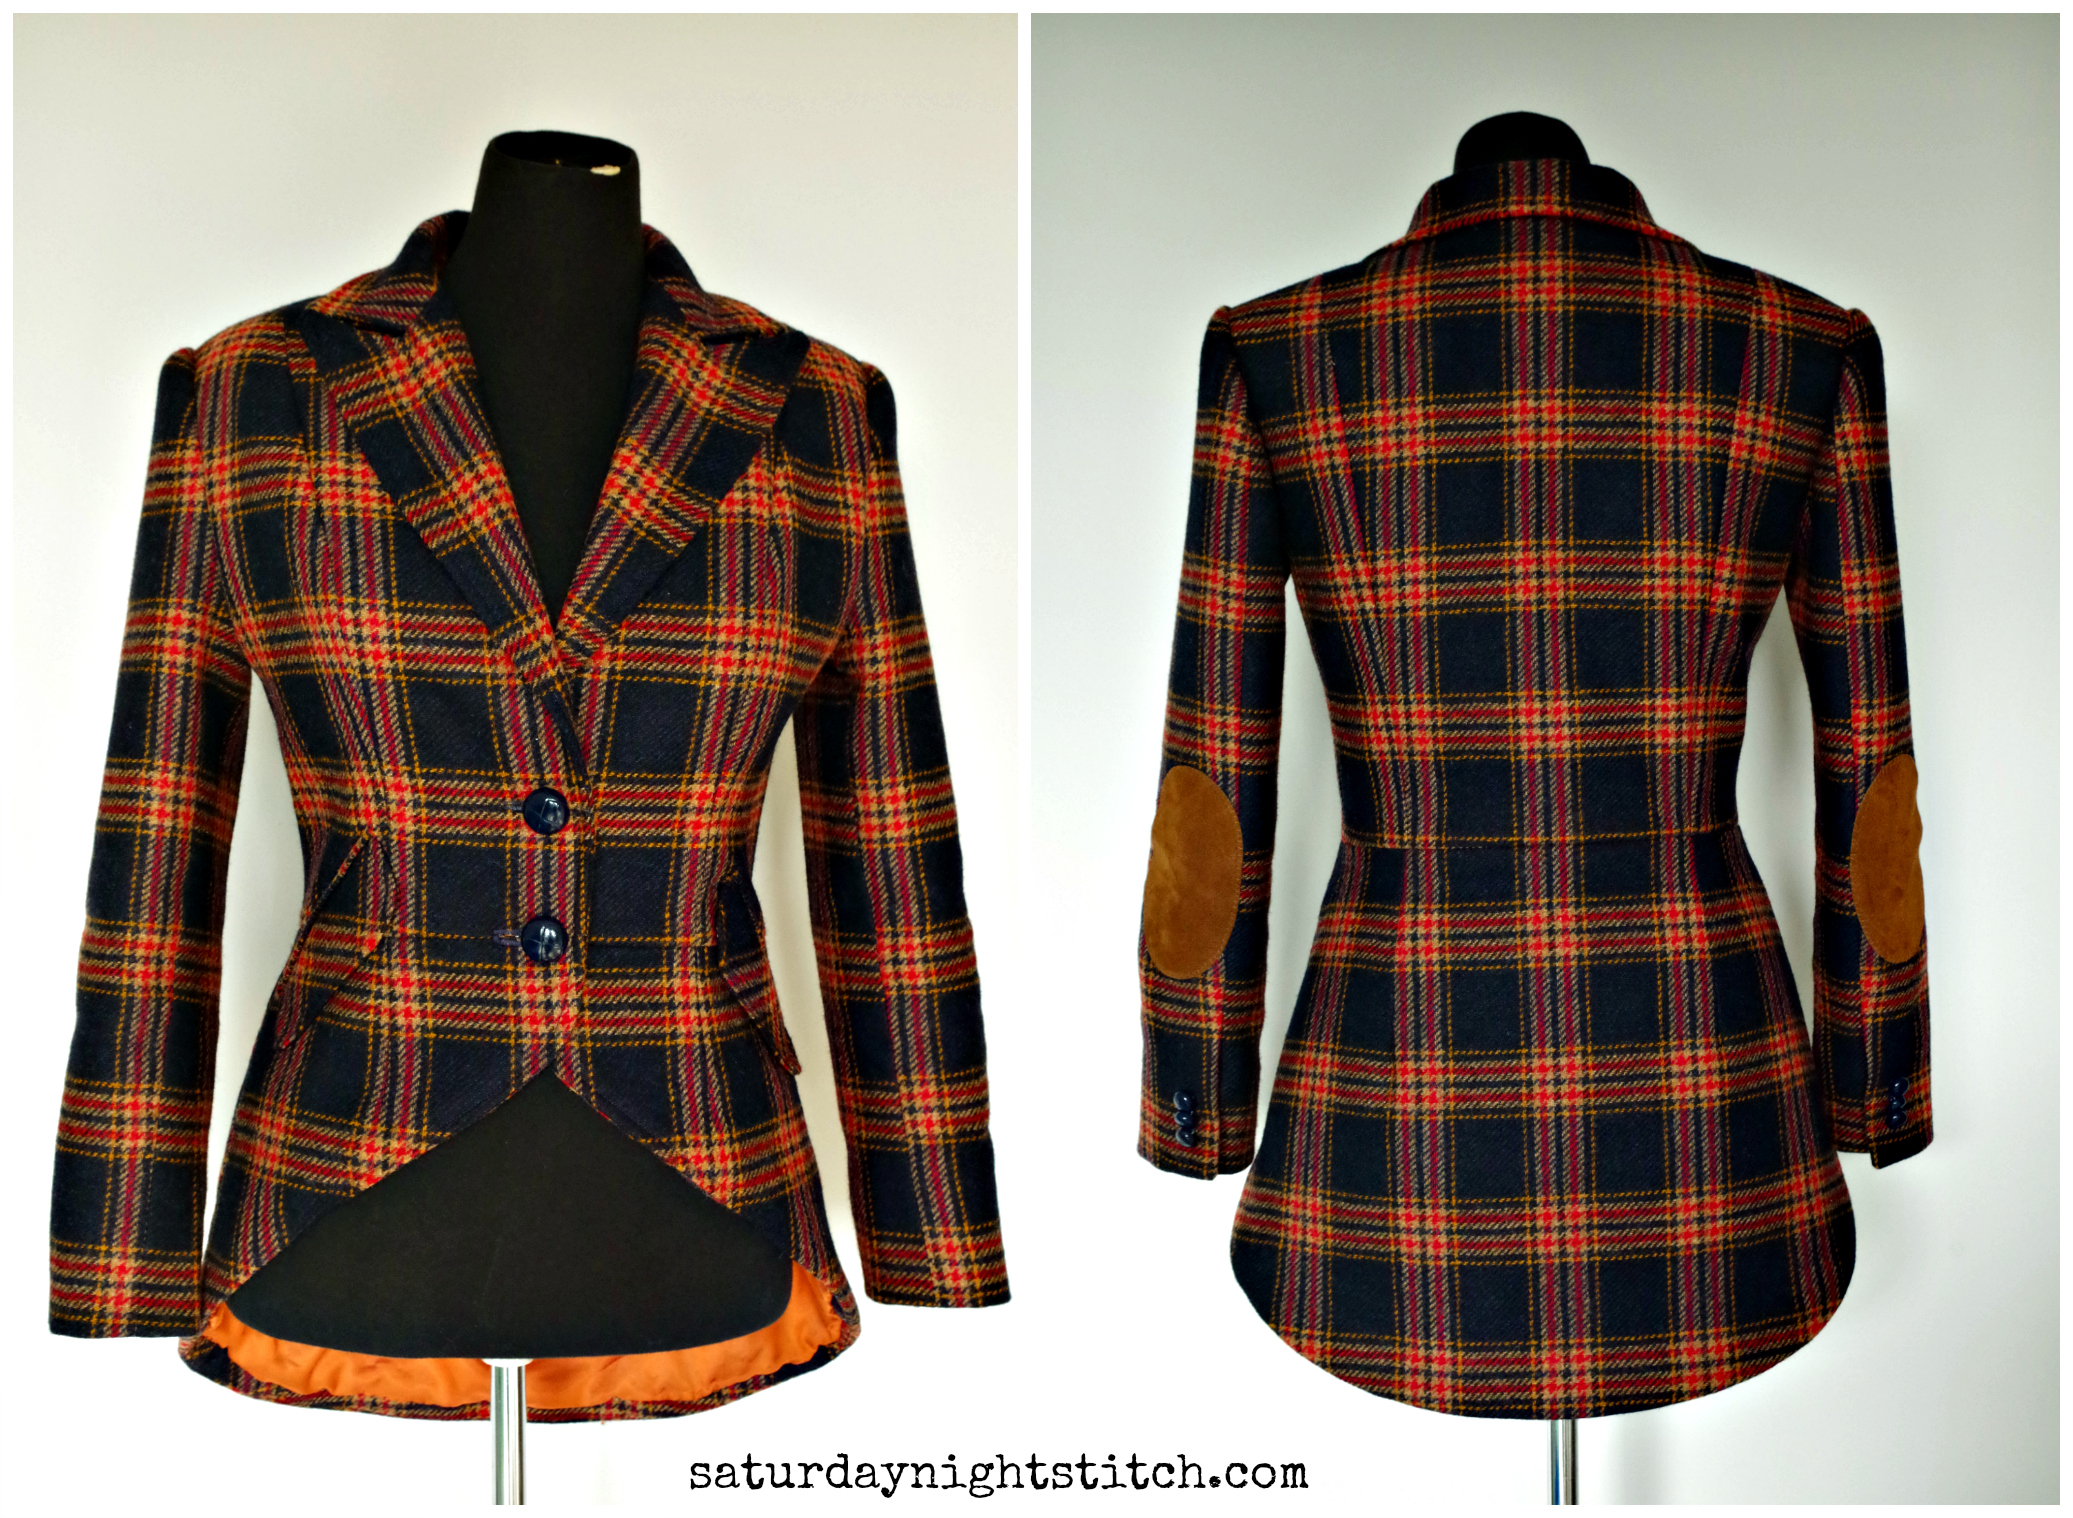 Vogue 8601- tailored jacket and graduating - saturday night stitch